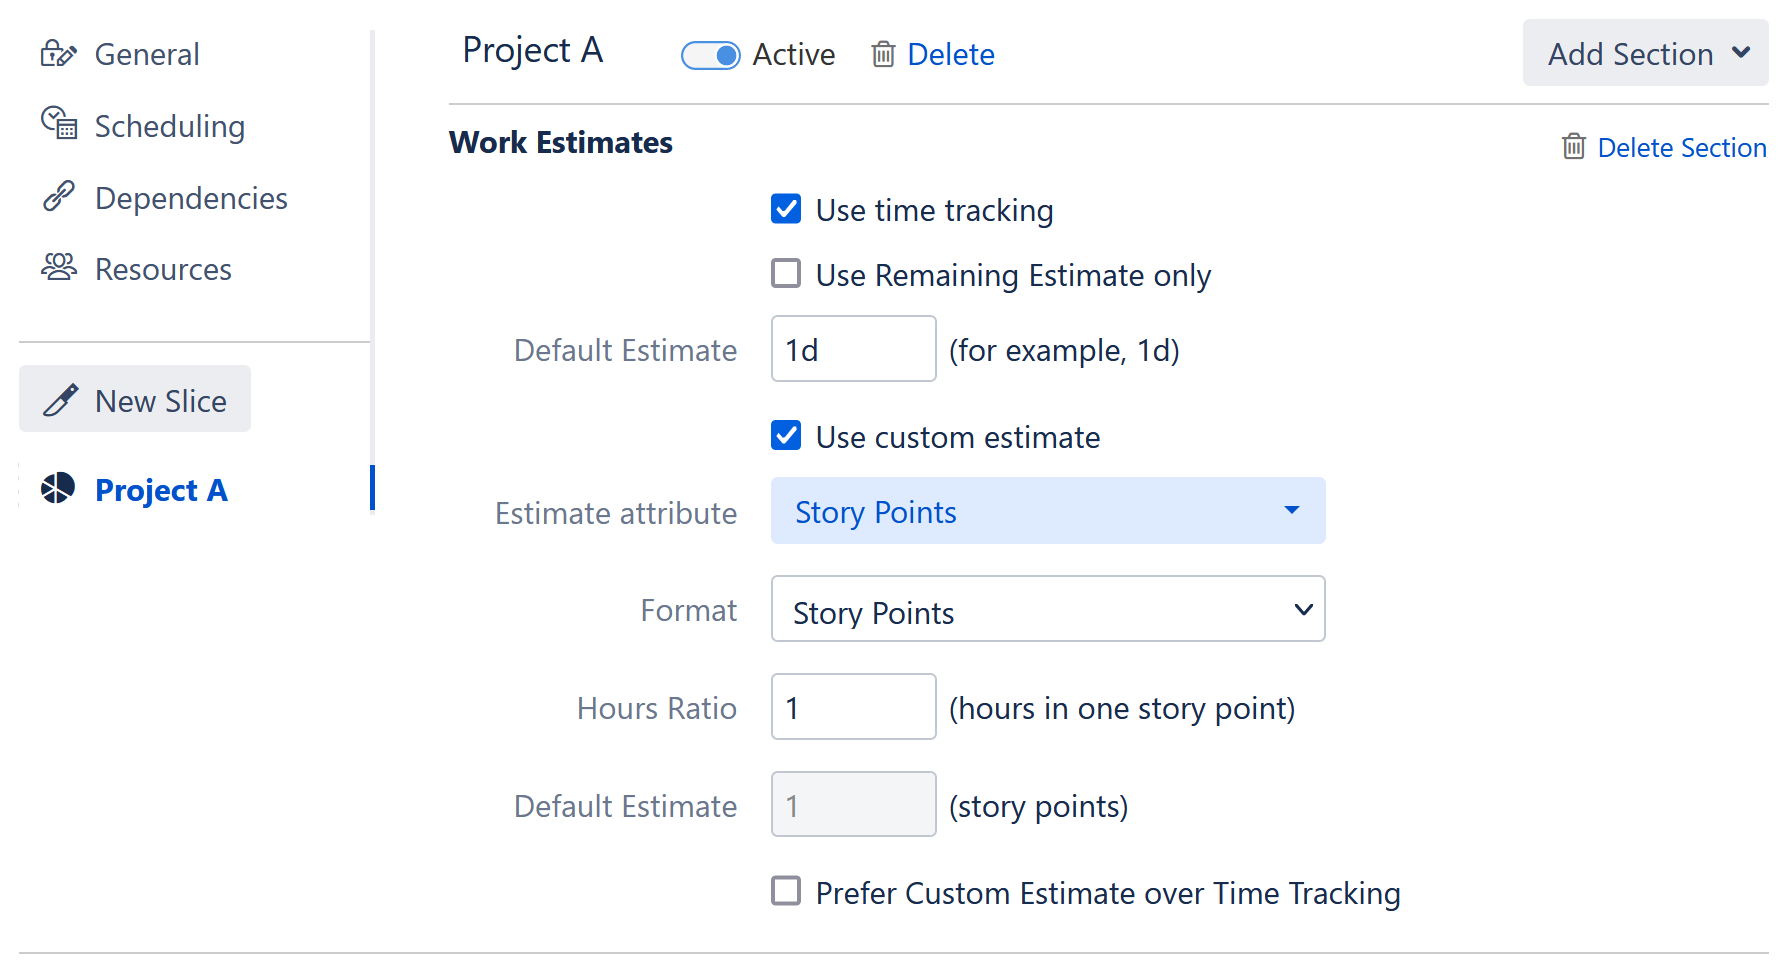 Adding a Custom Work Estimate